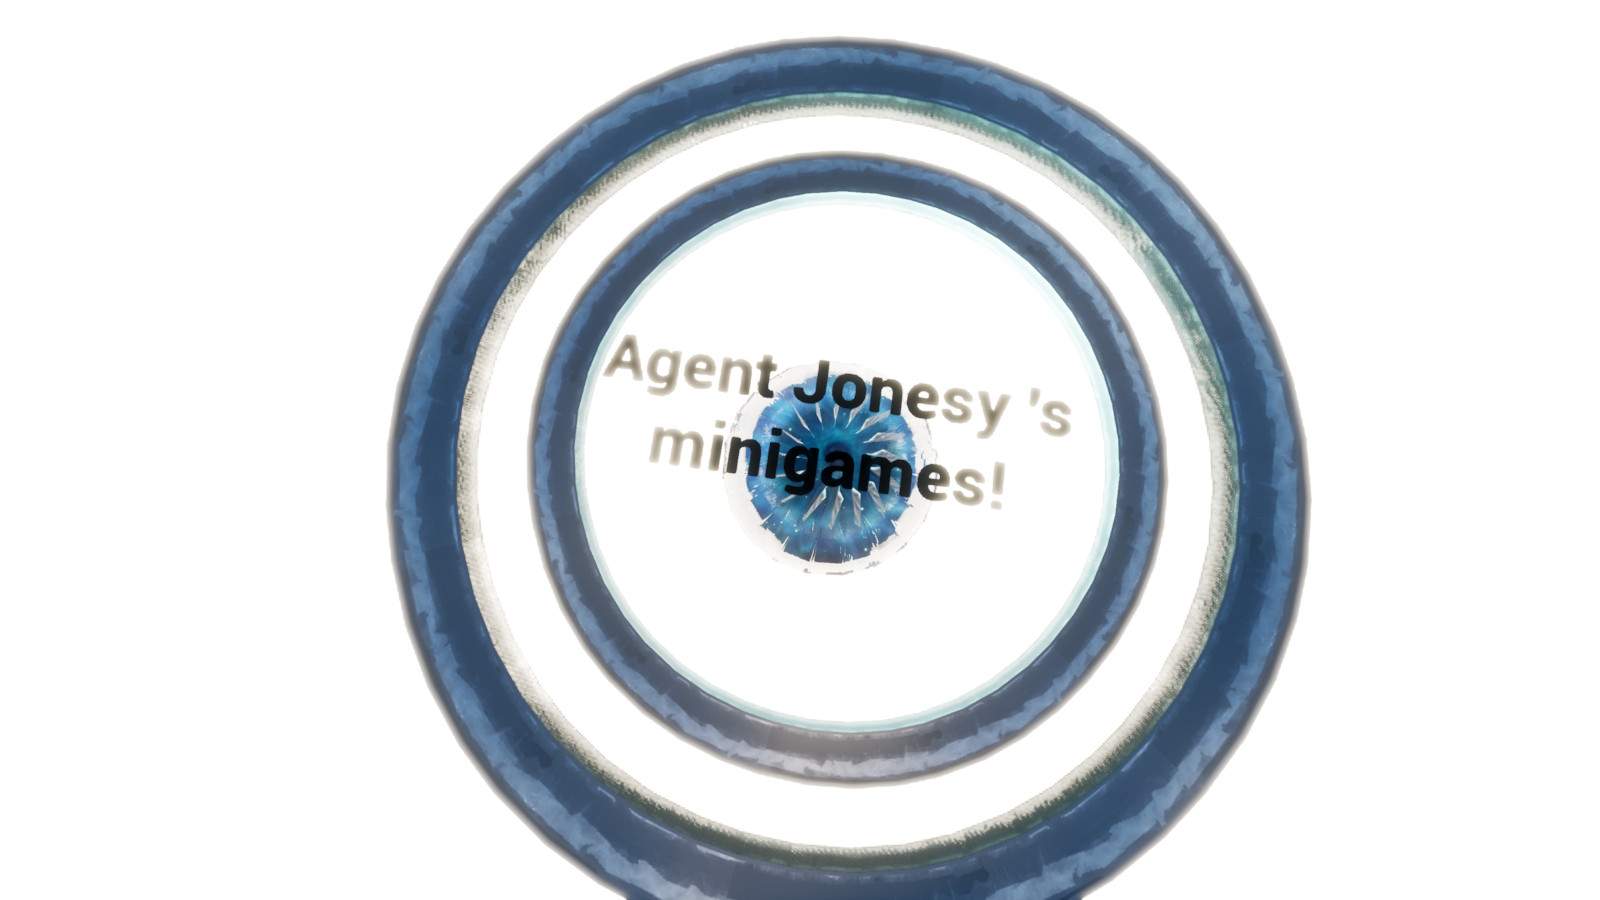 AGENT JONESY 'S MINIGAMES!